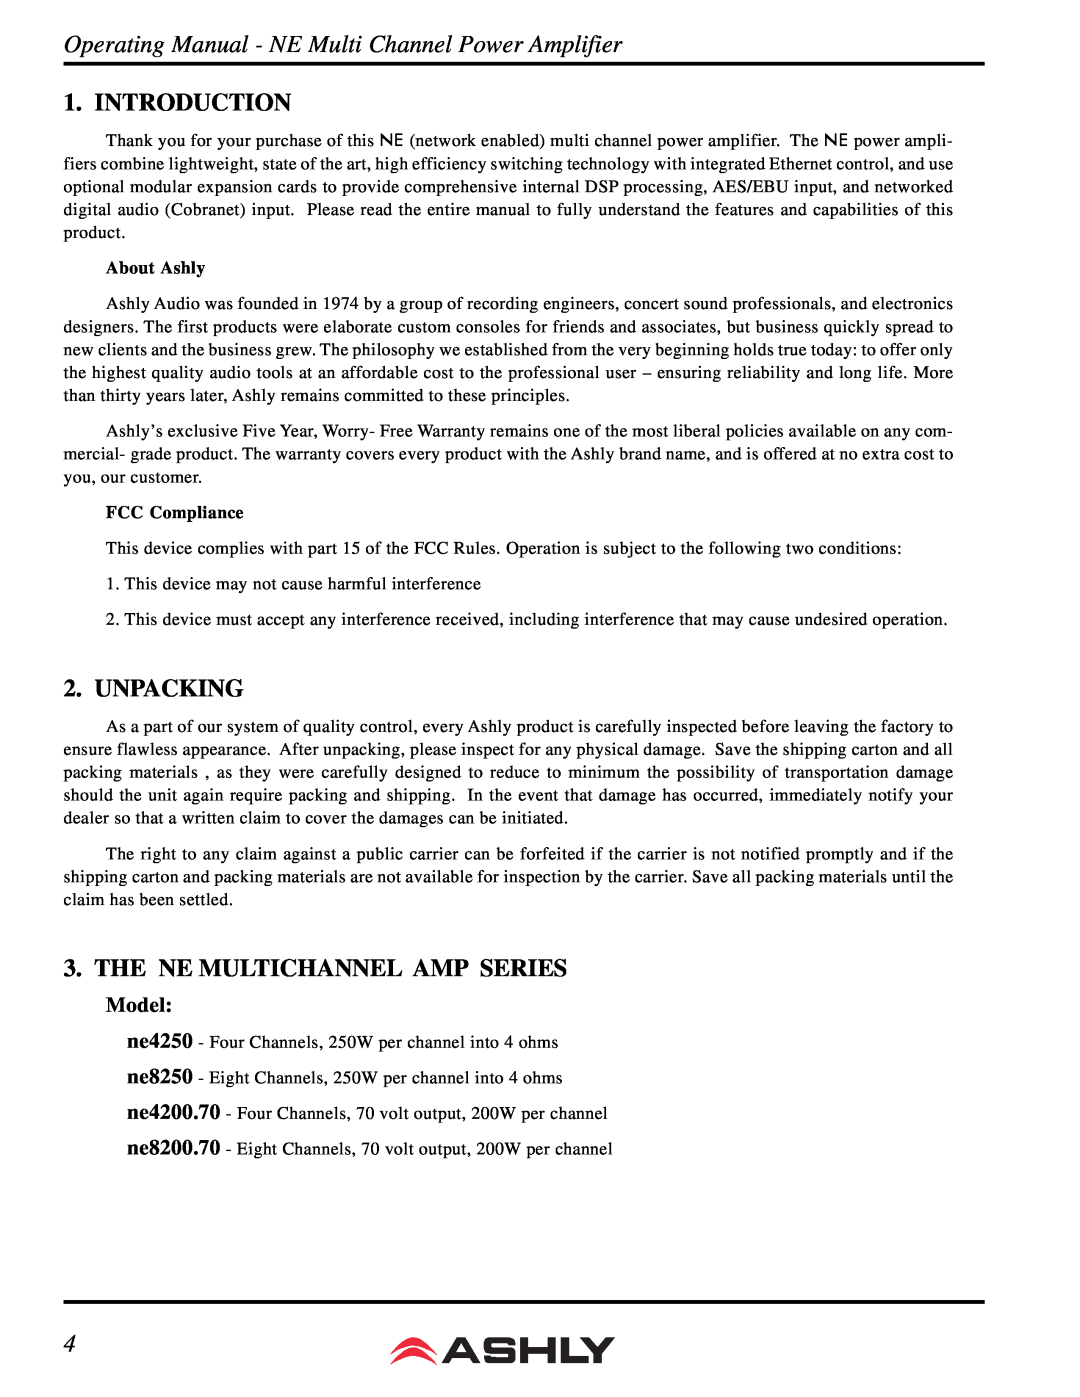 Ashly NE 4200.25 manual Introduction, Unpacking, The Ne Multichannel Amp Series, Model, About Ashly, FCC Compliance 